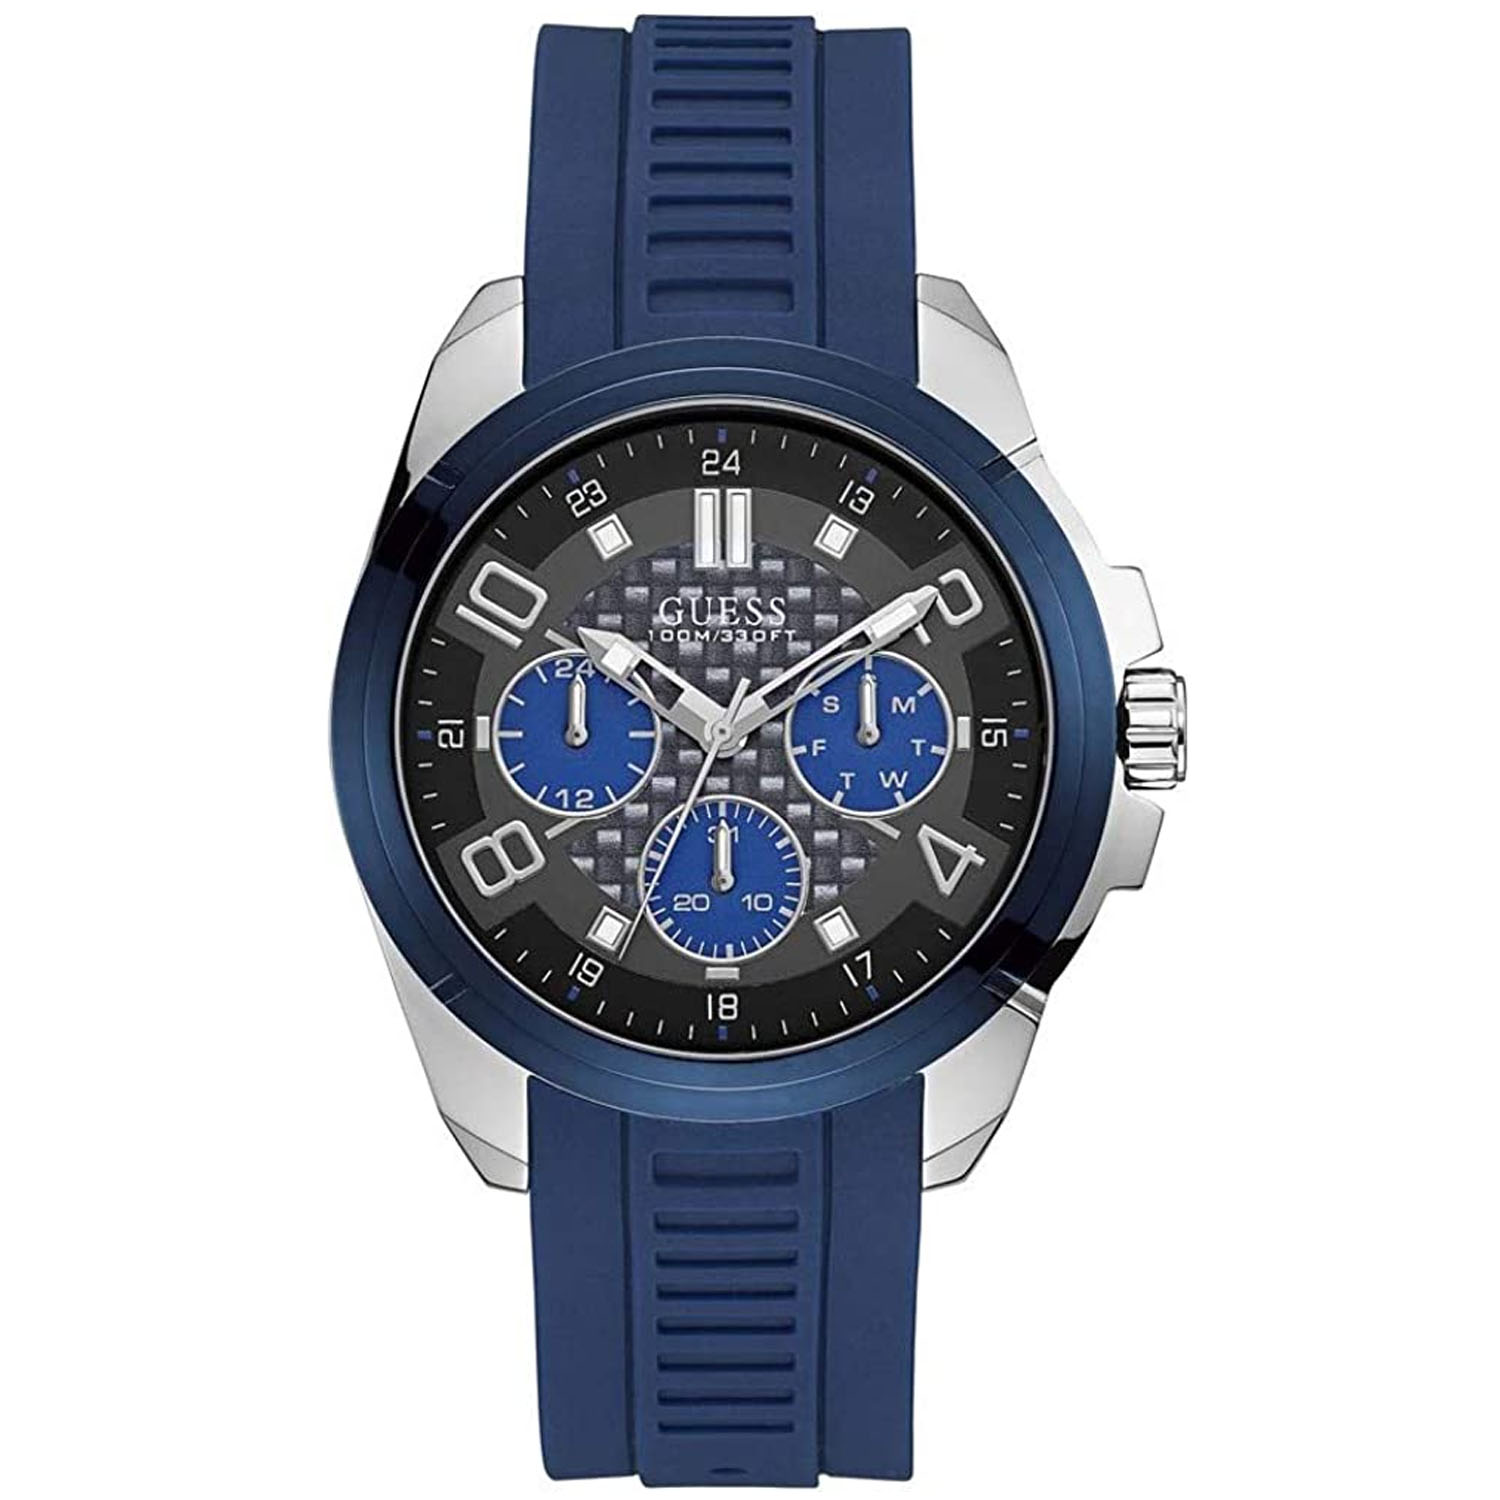 Guess Men's Classic Black Dial Watch - W1050G1